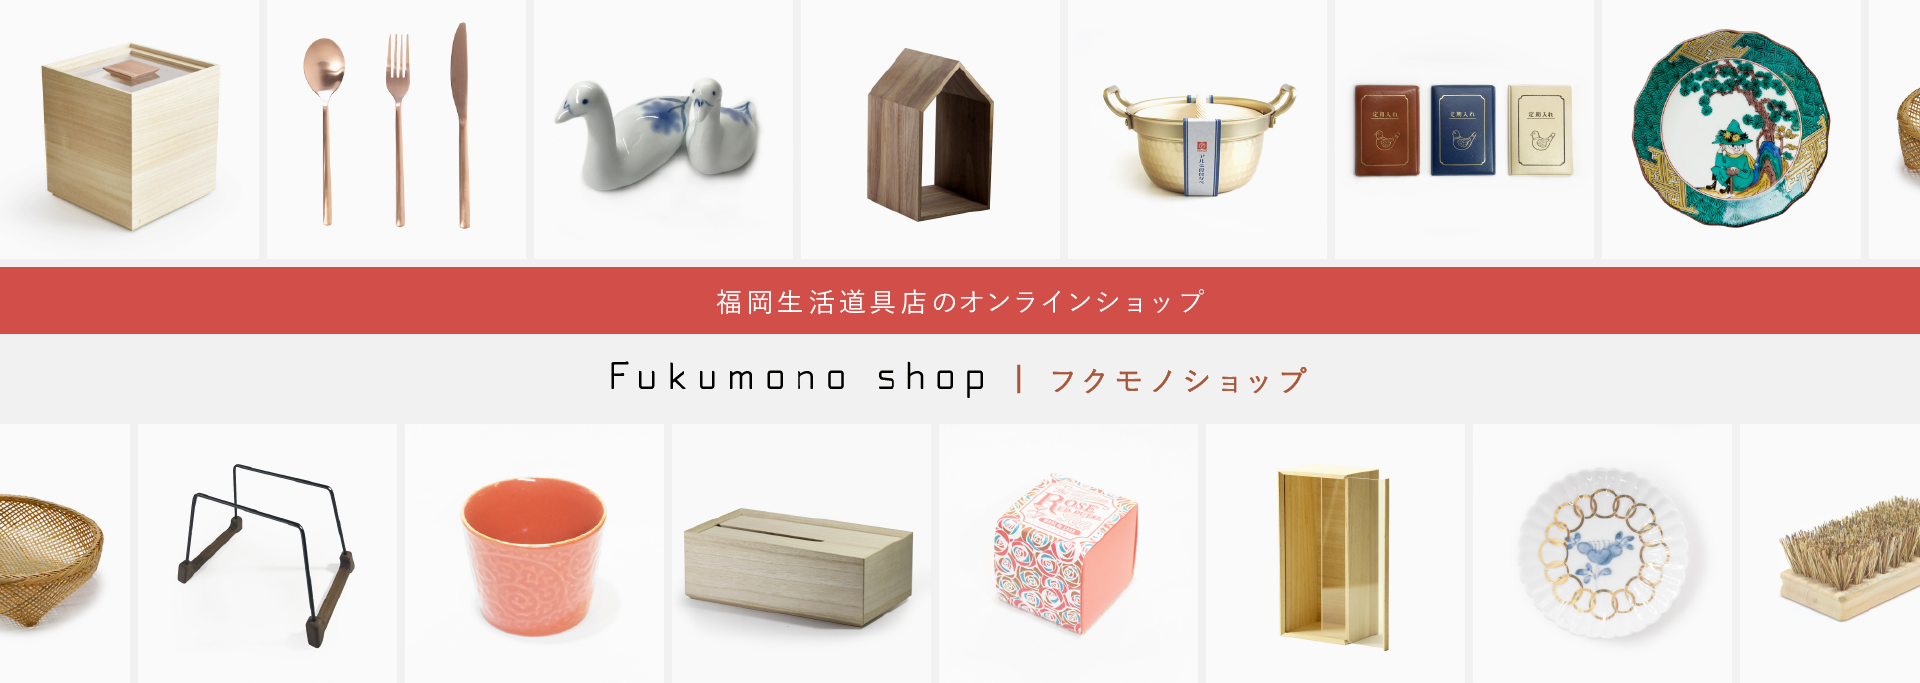 Fukumono shop | フクモノショップ